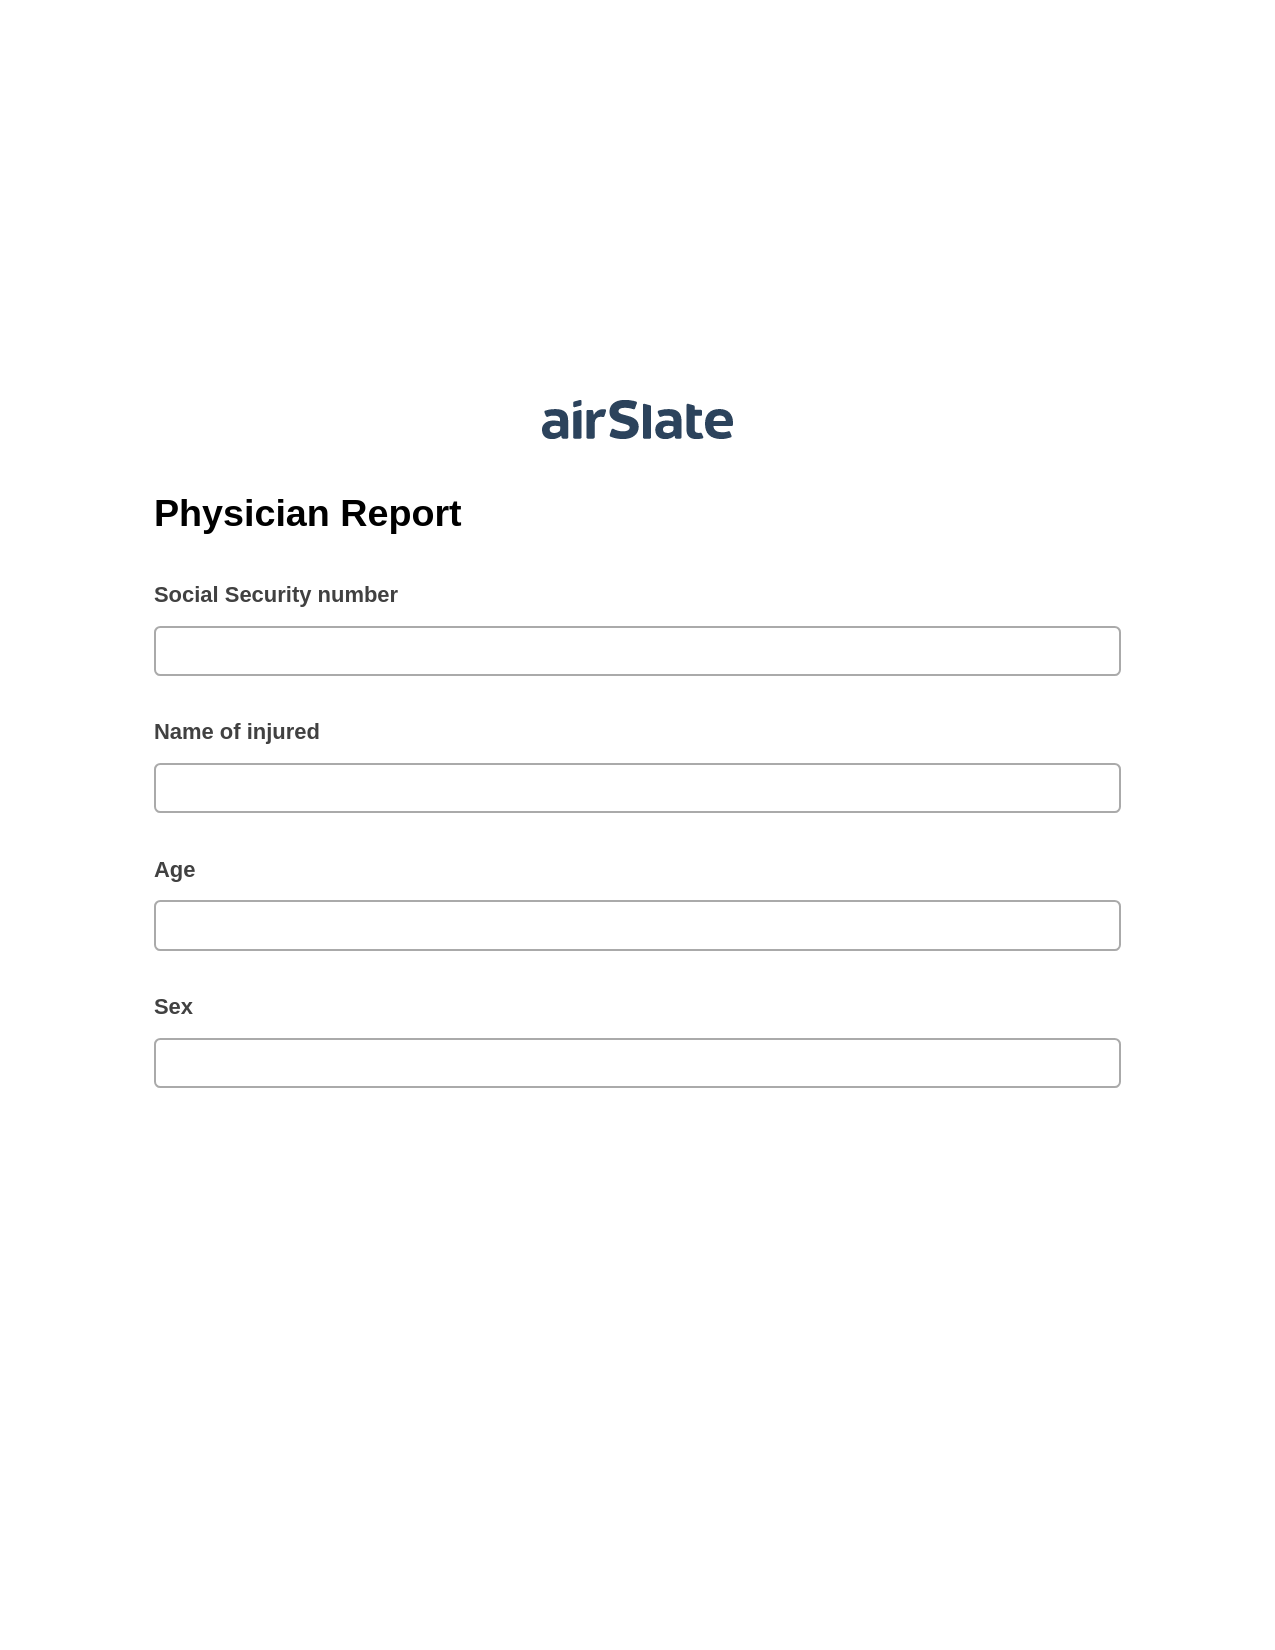 Physician Report Pre-fill Dropdowns from MySQL Bot, Lock the Slate Bot, Export to MySQL Bot